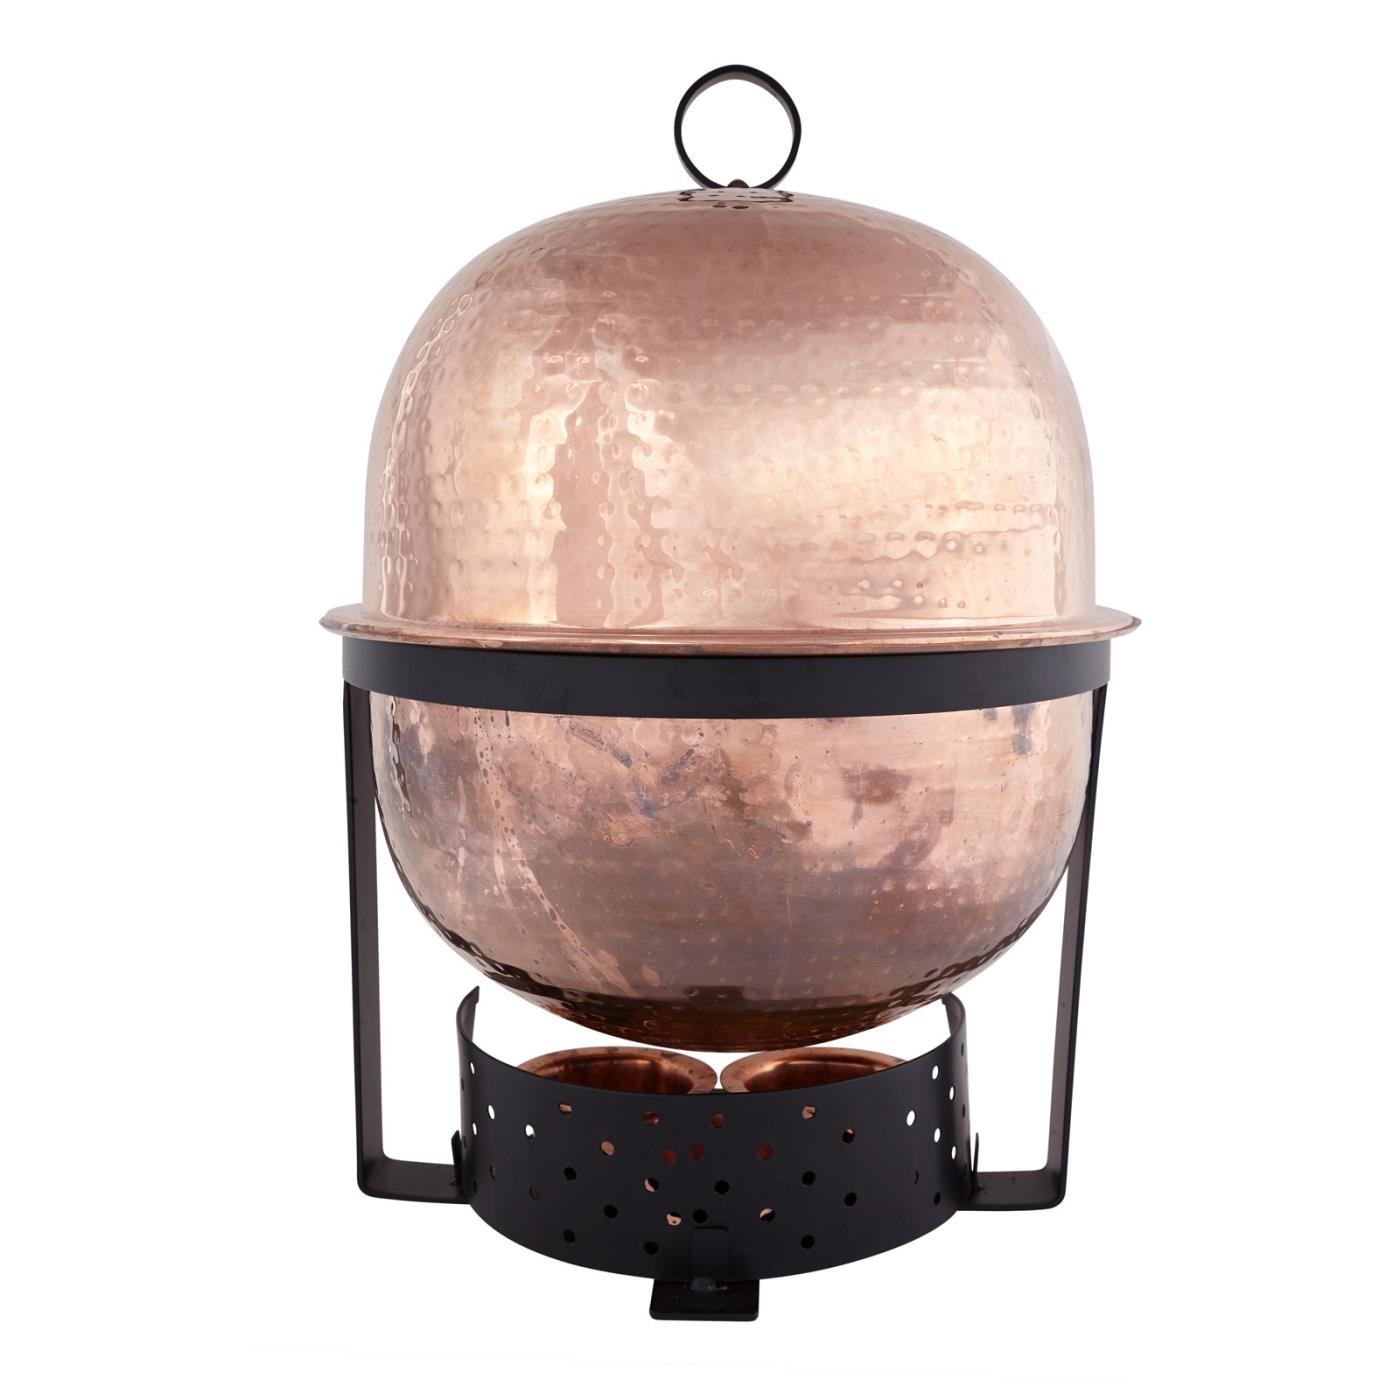 Copper Lofti Round Chafer - 10 Qt